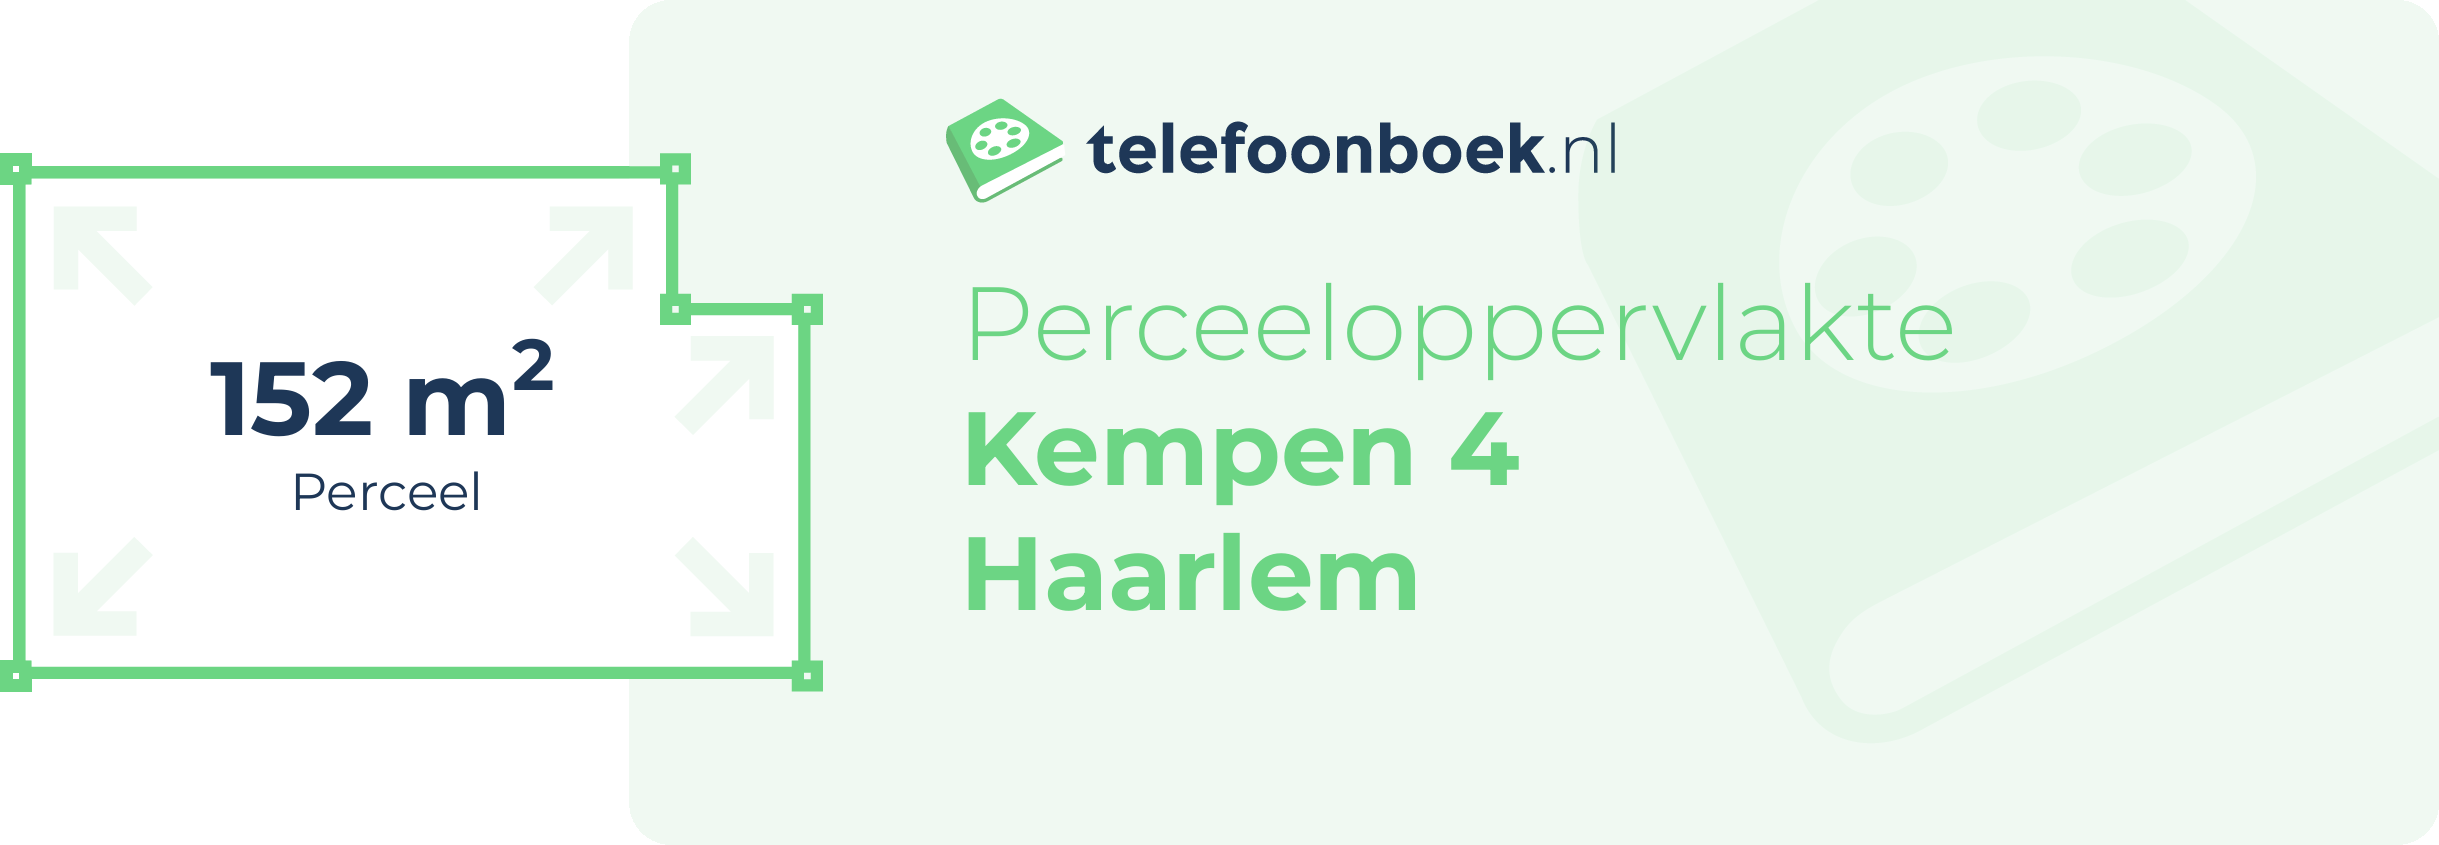 Perceeloppervlakte Kempen 4 Haarlem